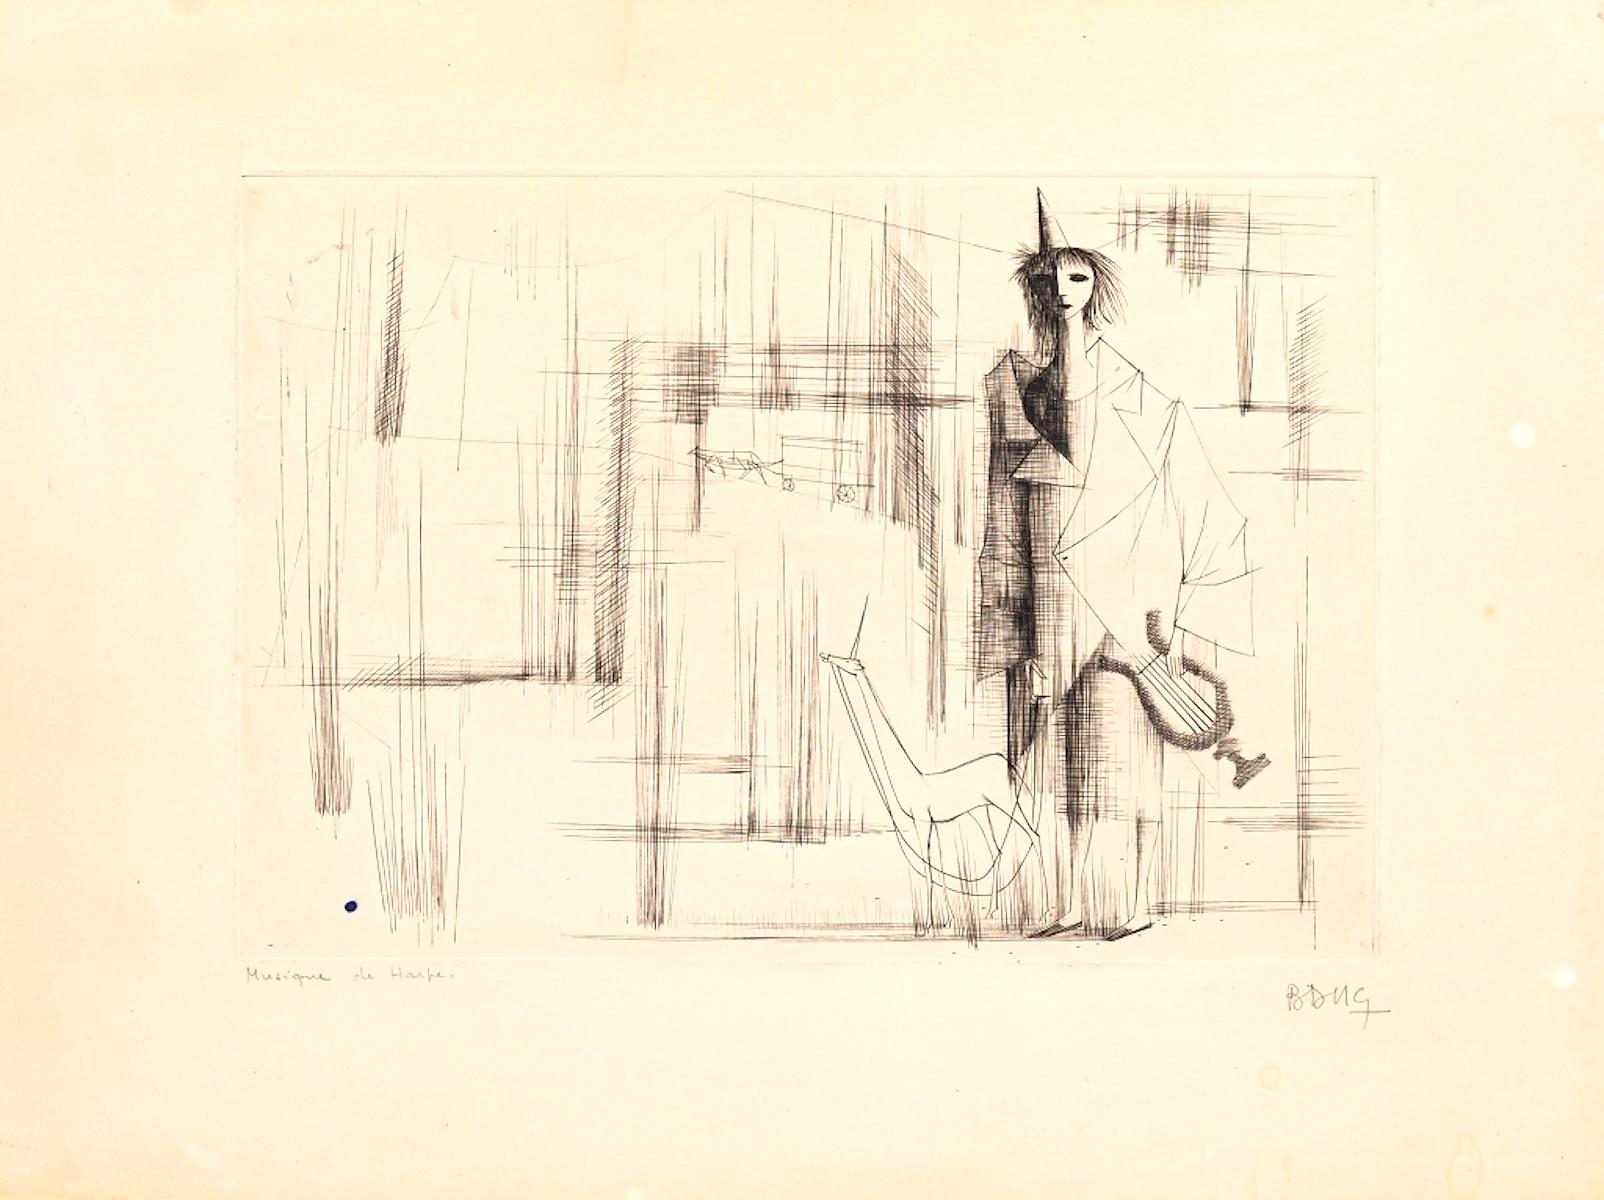 Cristian Bang Figurative Print - Musique de Harpe - Etching by C. Bang - Early 20th Century